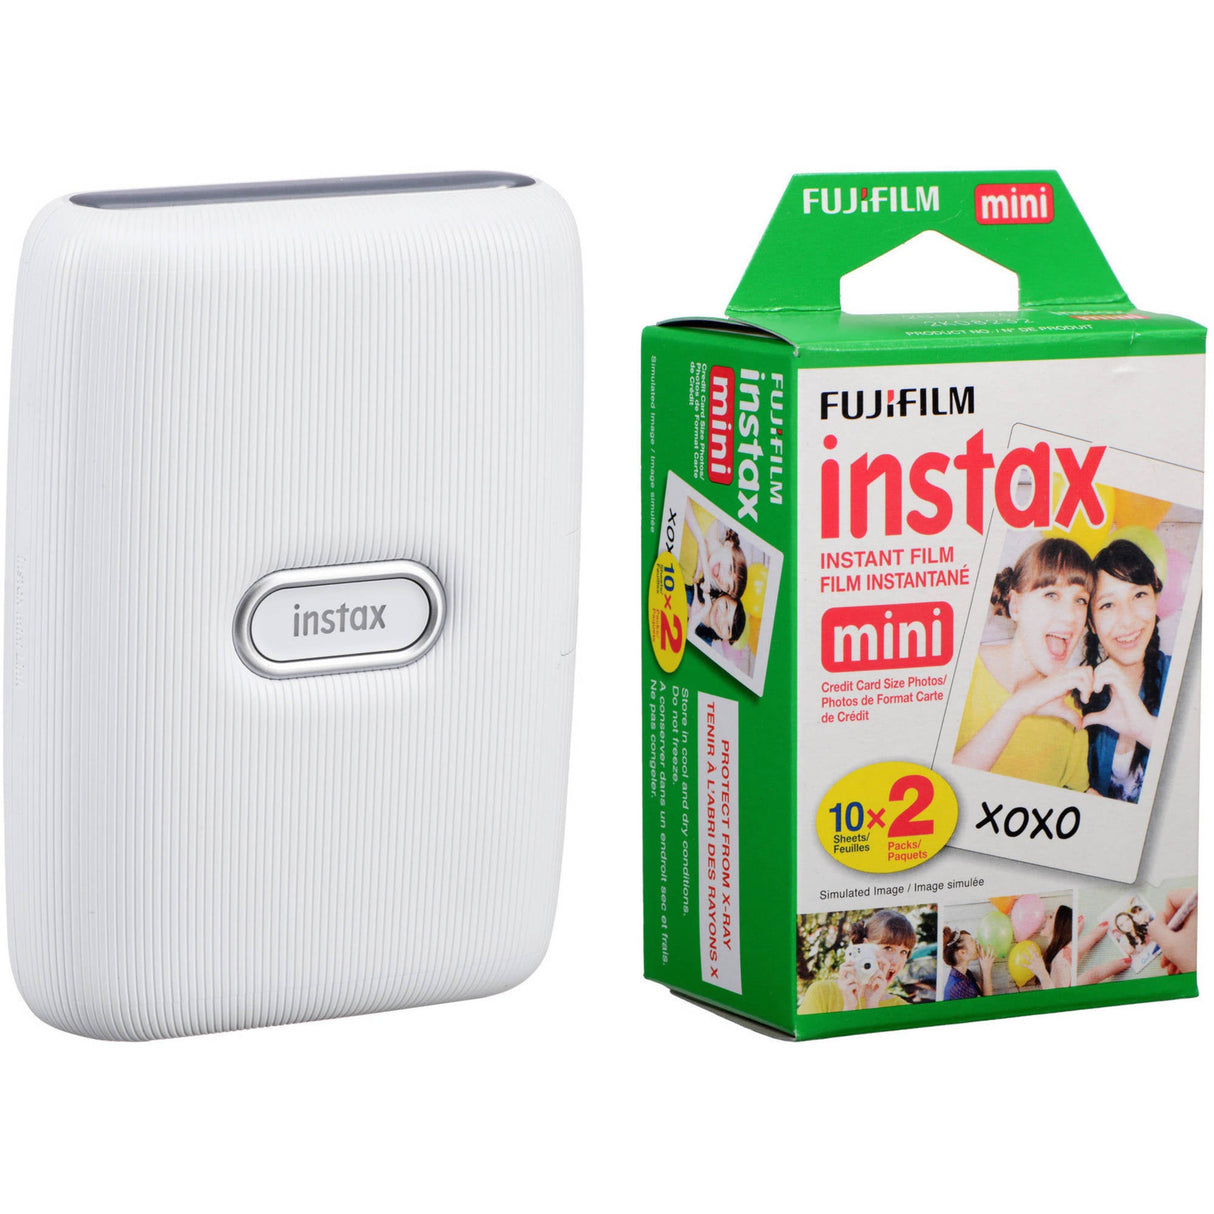 FUJIFILM INSTAX Mini Link Smartphone Printer with Instant Film (20 Color Exposures) Ash White